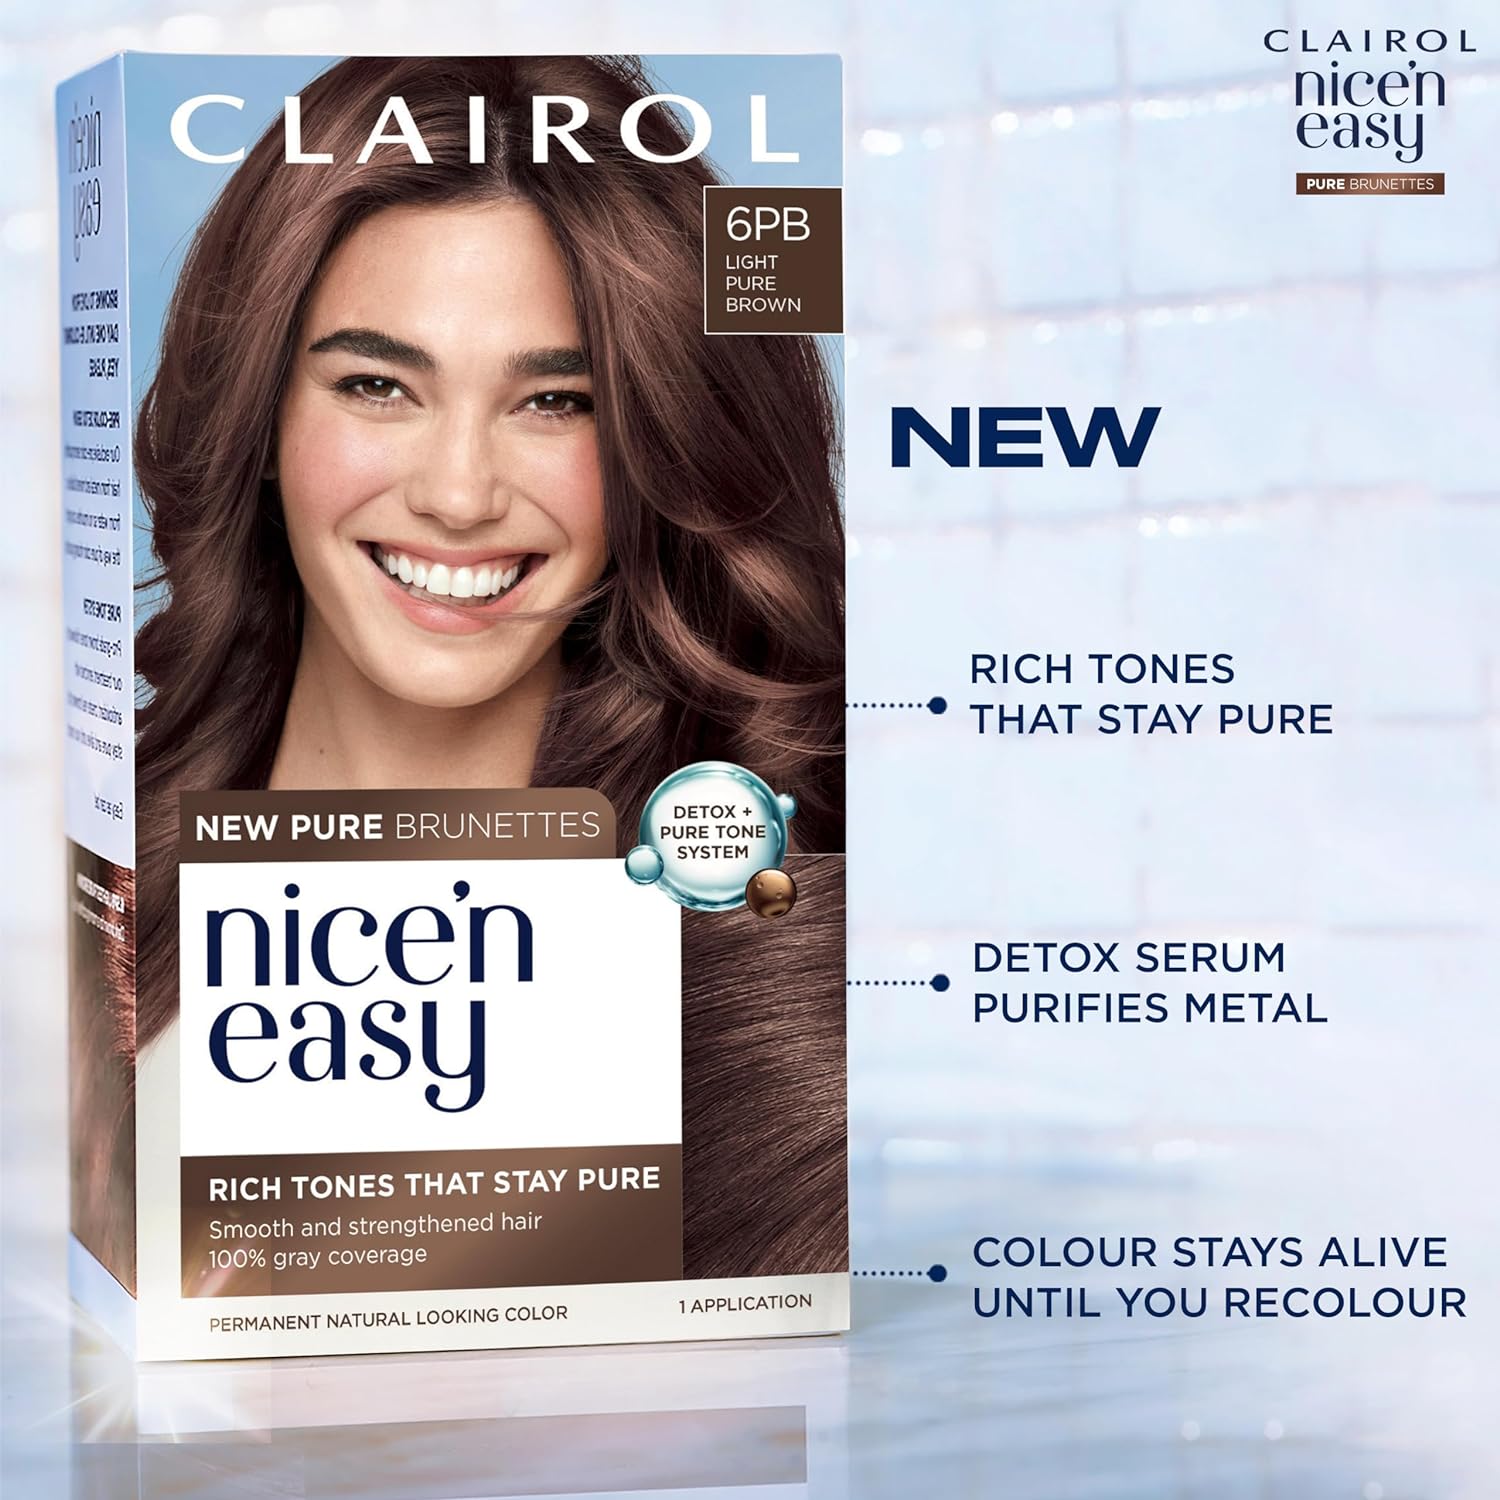 Clairol Nice n’ Easy Pure Brunettes Hair Colour 5PB Medium Mocha Brown , Permanent Hair Dye